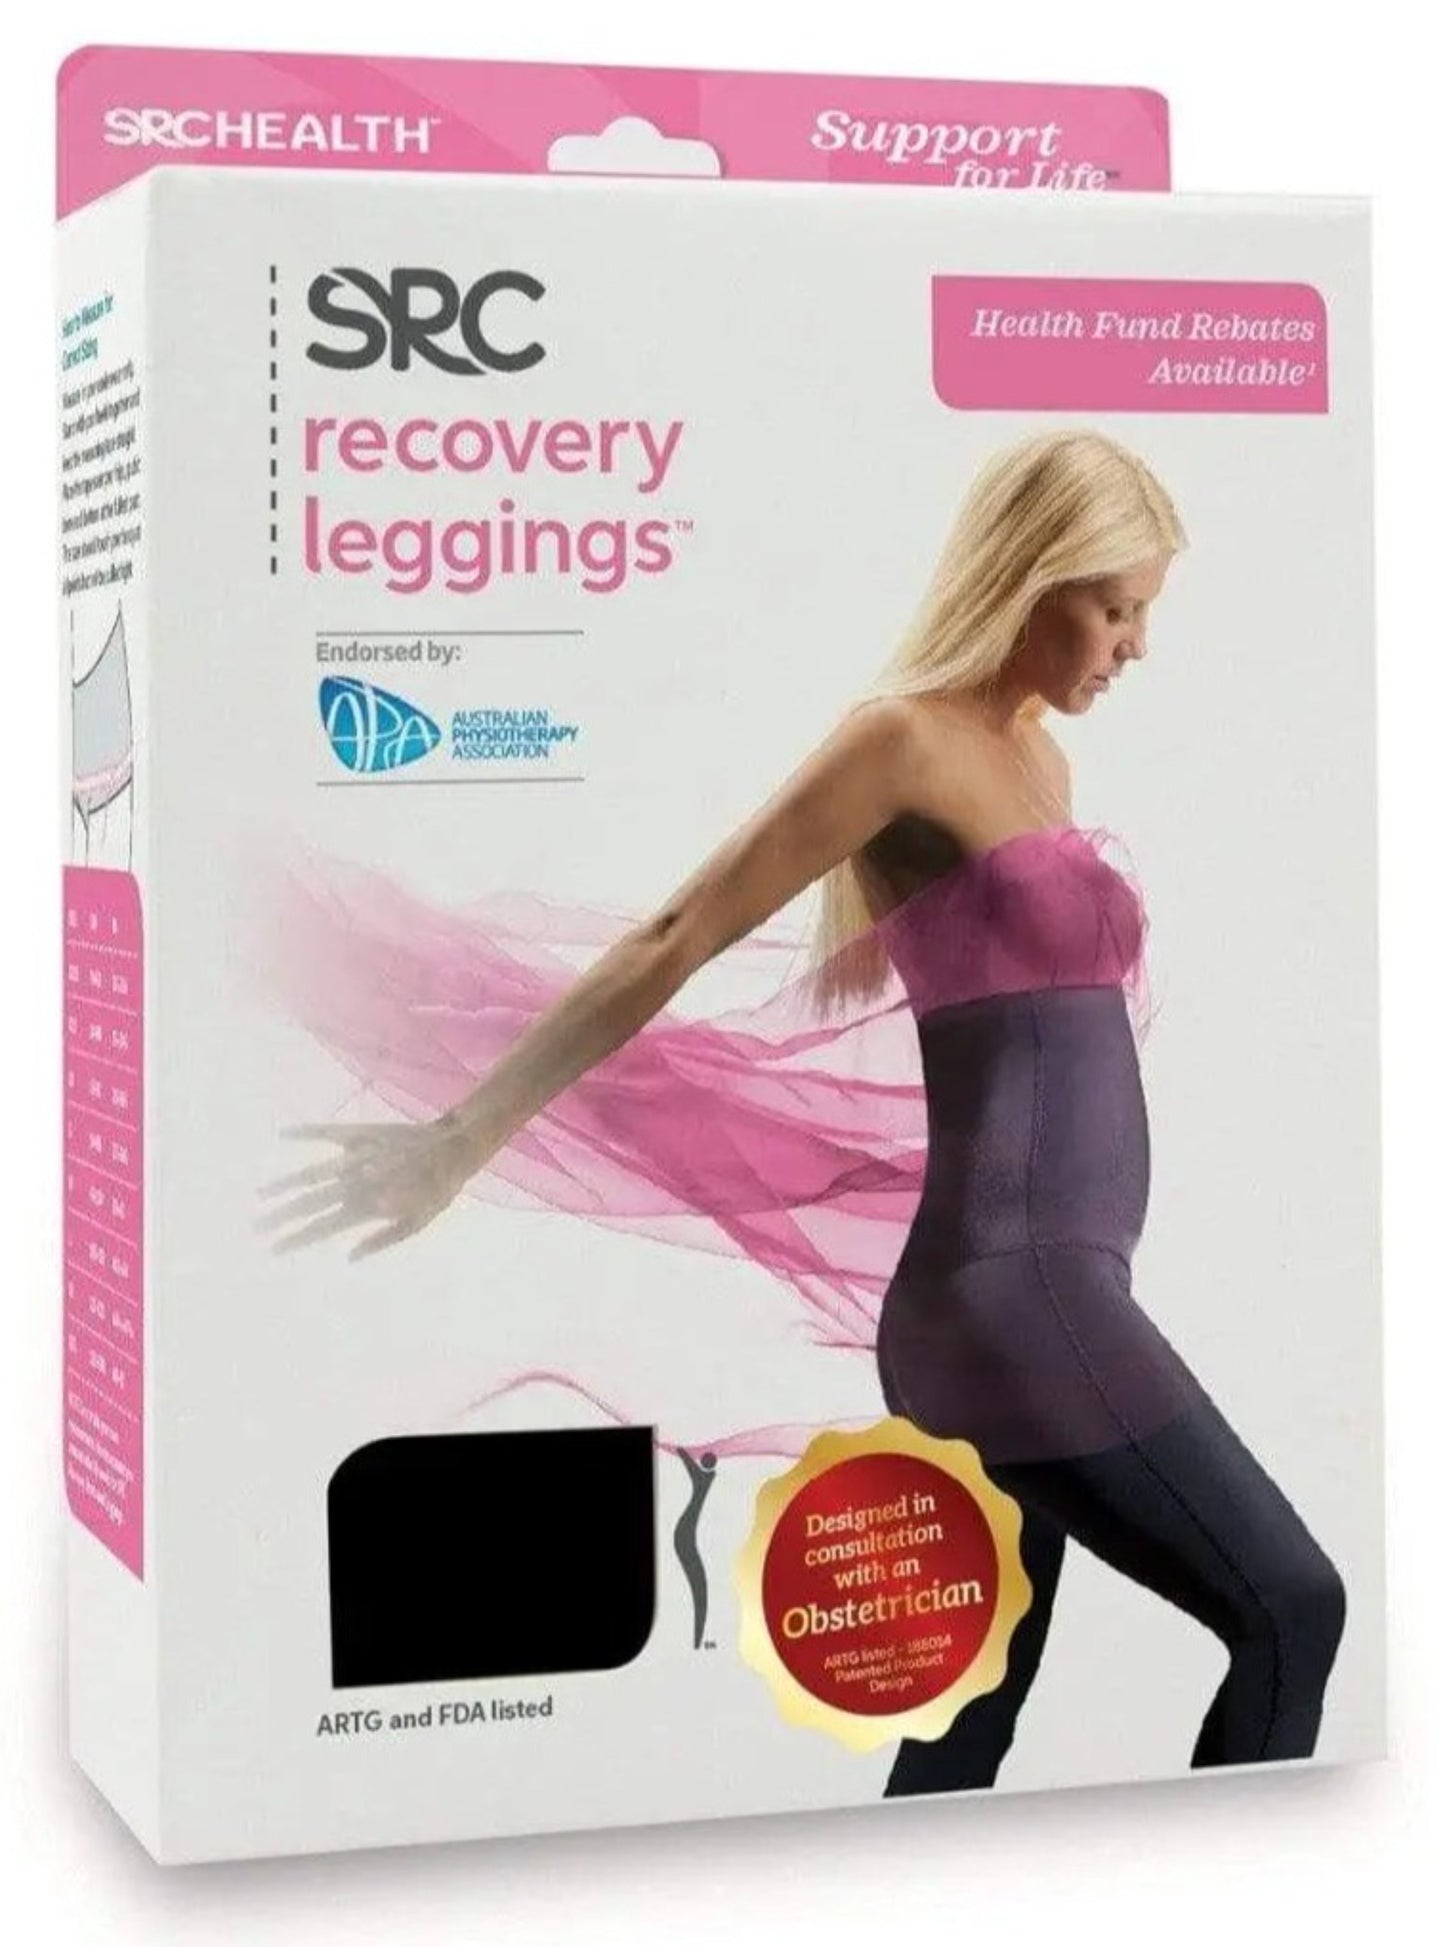 Maternity clothing SRC Recovery Leggings for moms - Black SRC Health 199.00